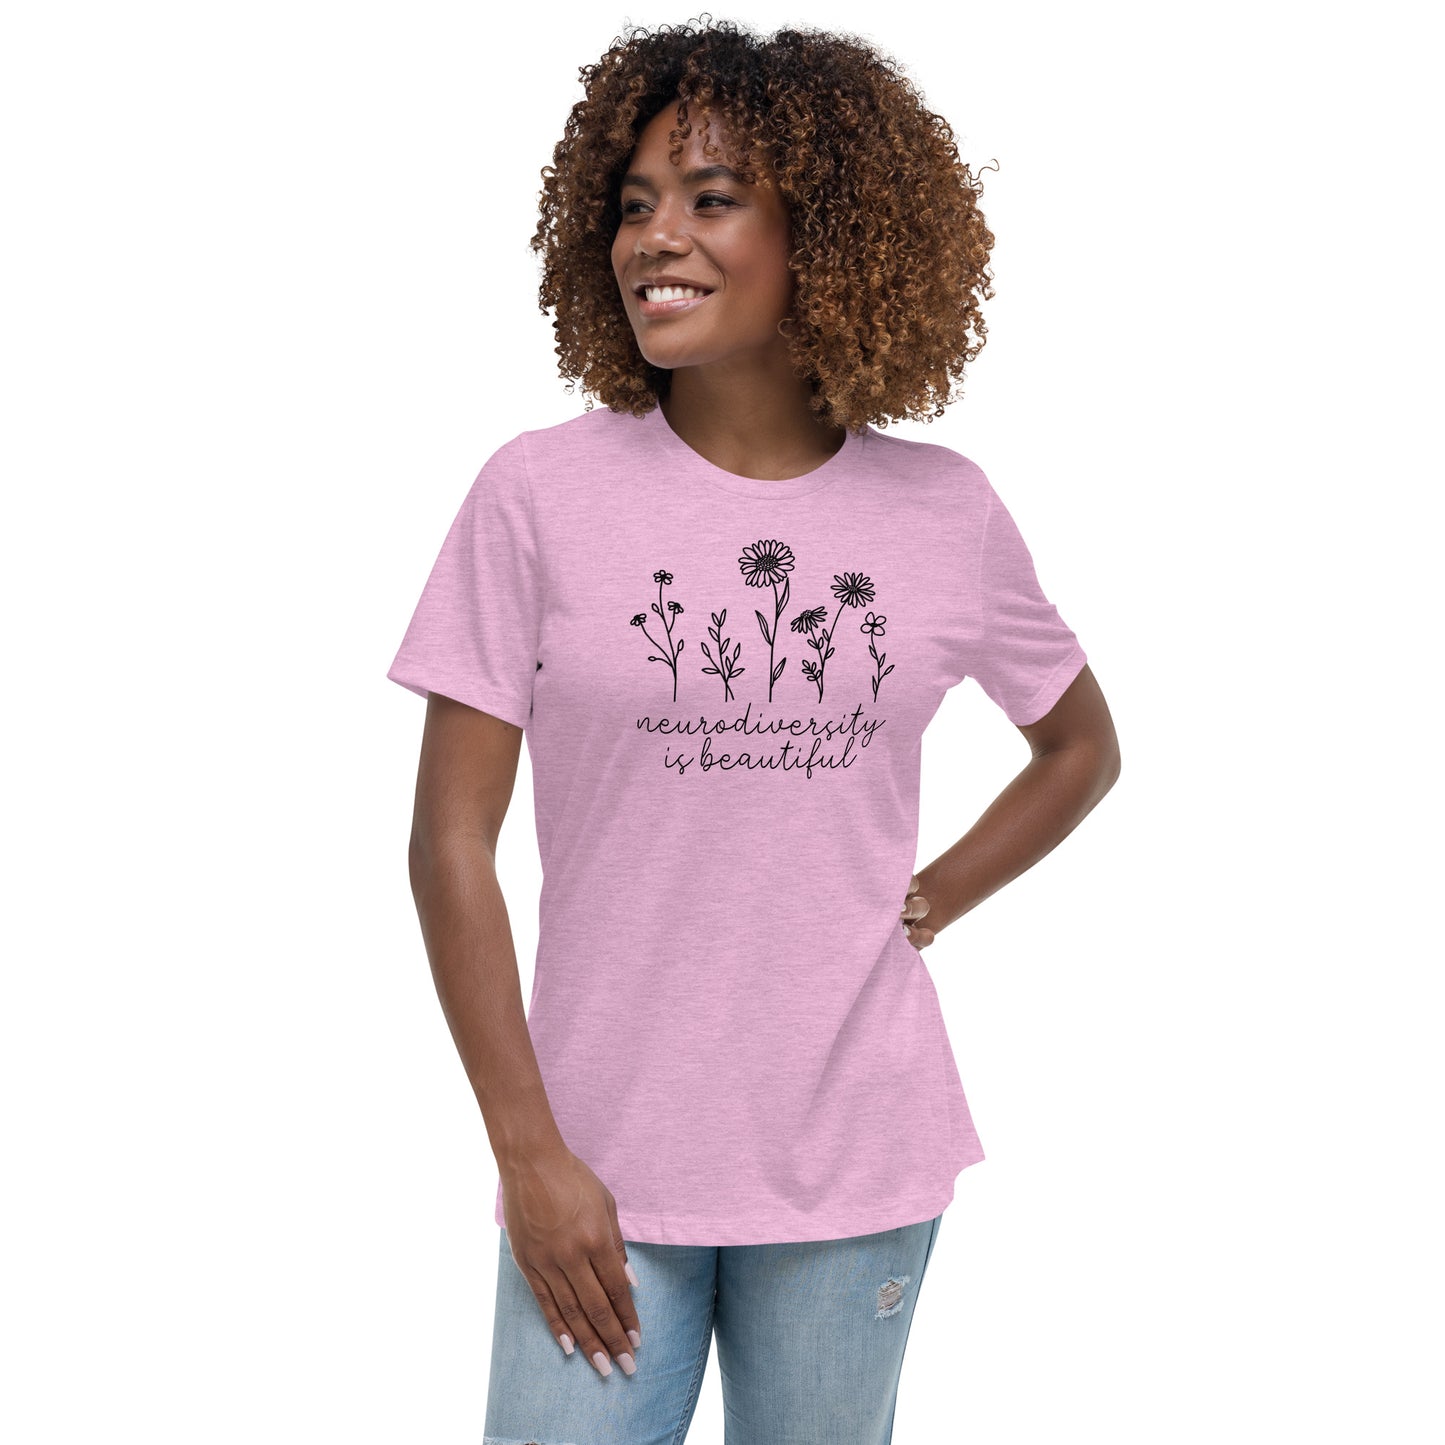 Neurodiversity is Beautiful - Women’s T-shirt